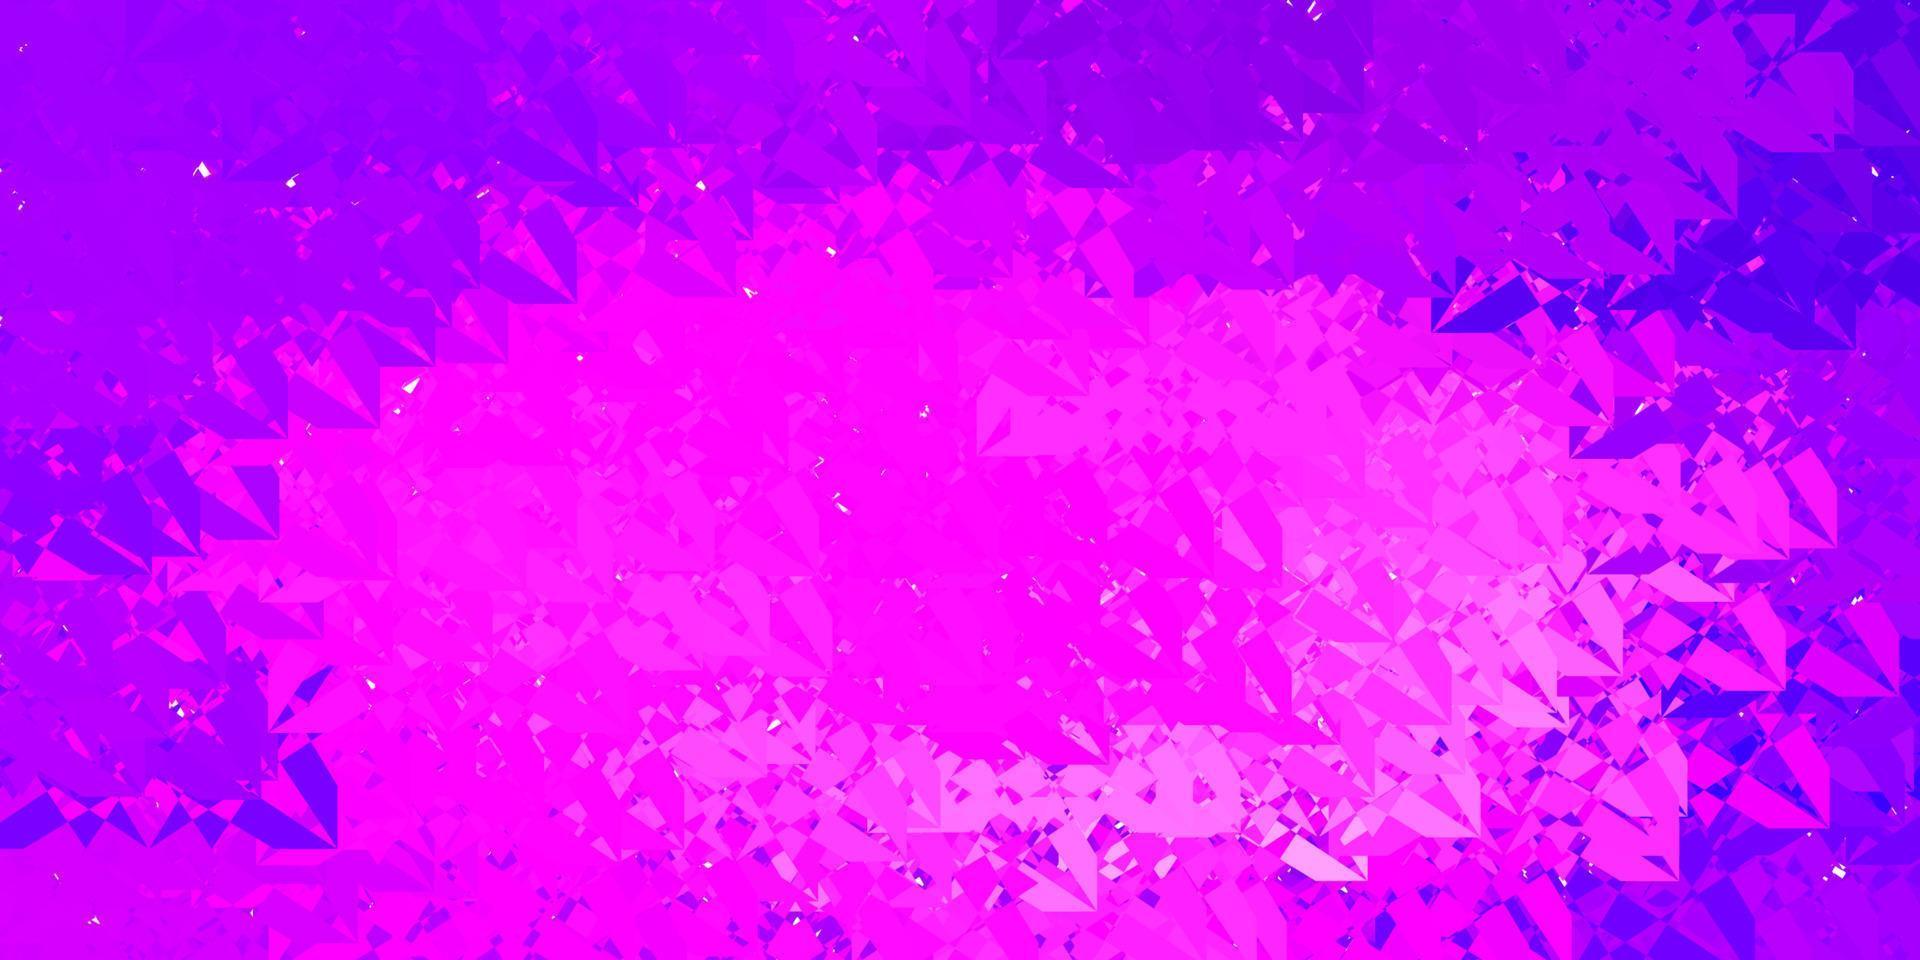 diseño vectorial de color púrpura oscuro con formas triangulares. vector